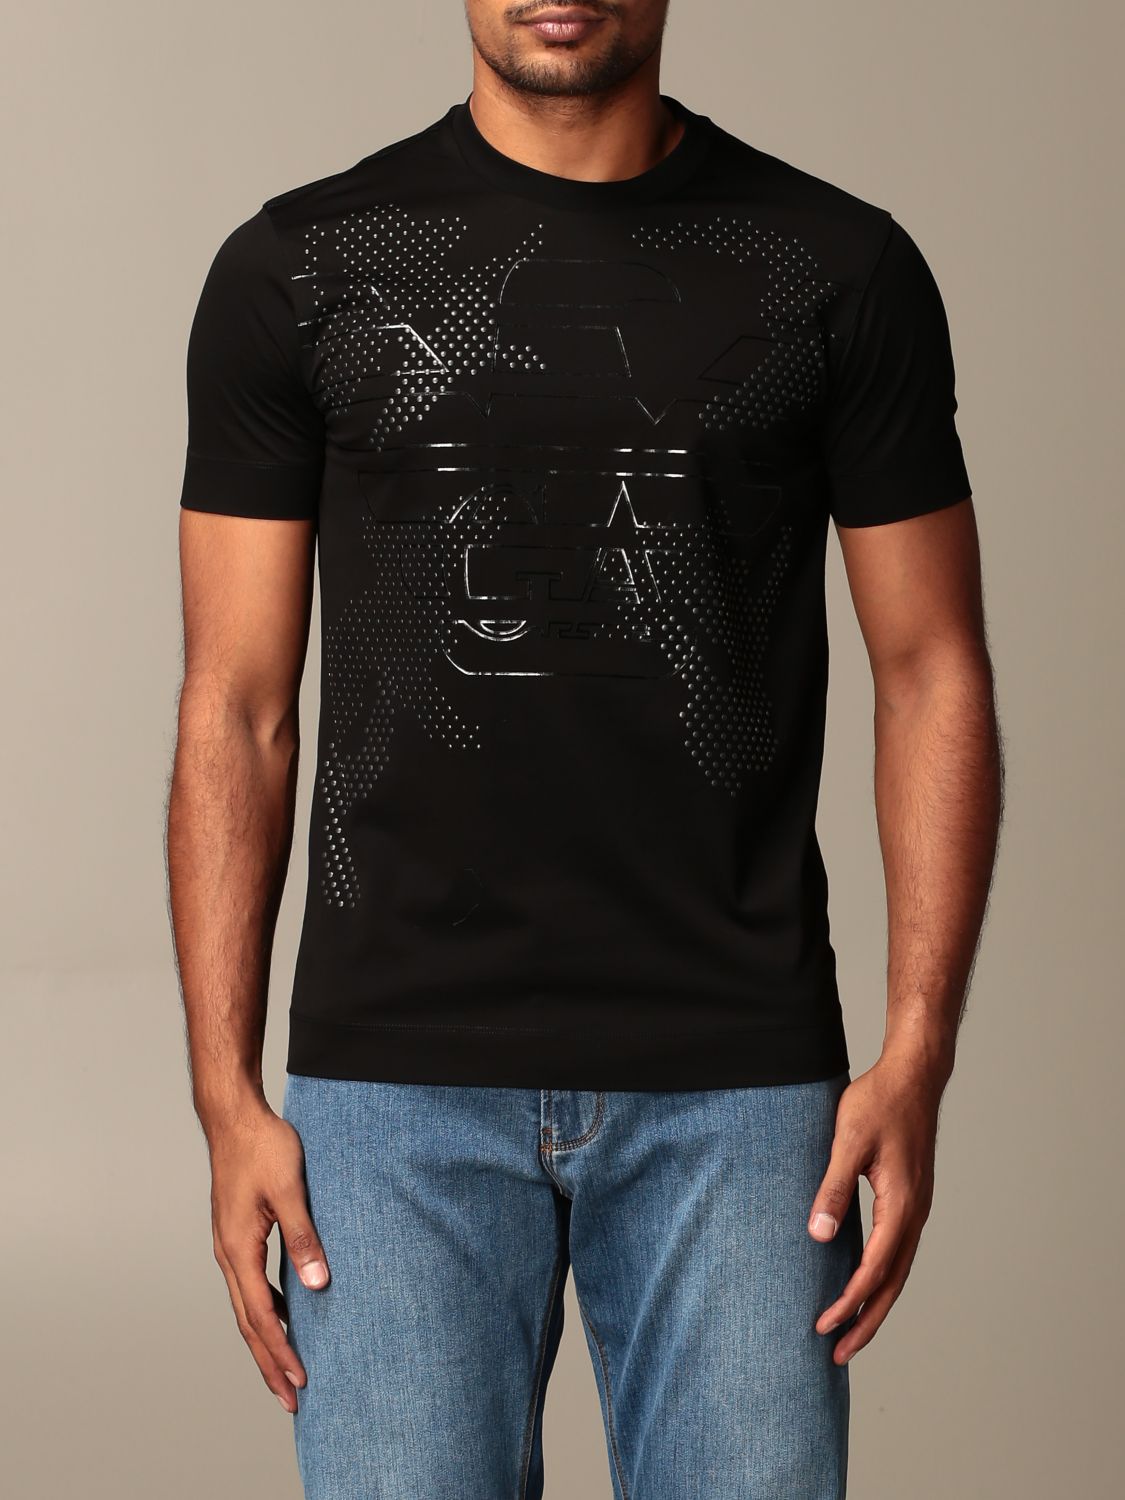 Emporio Armani Outlet: t-shirt for men - Black | Emporio Armani t-shirt ...